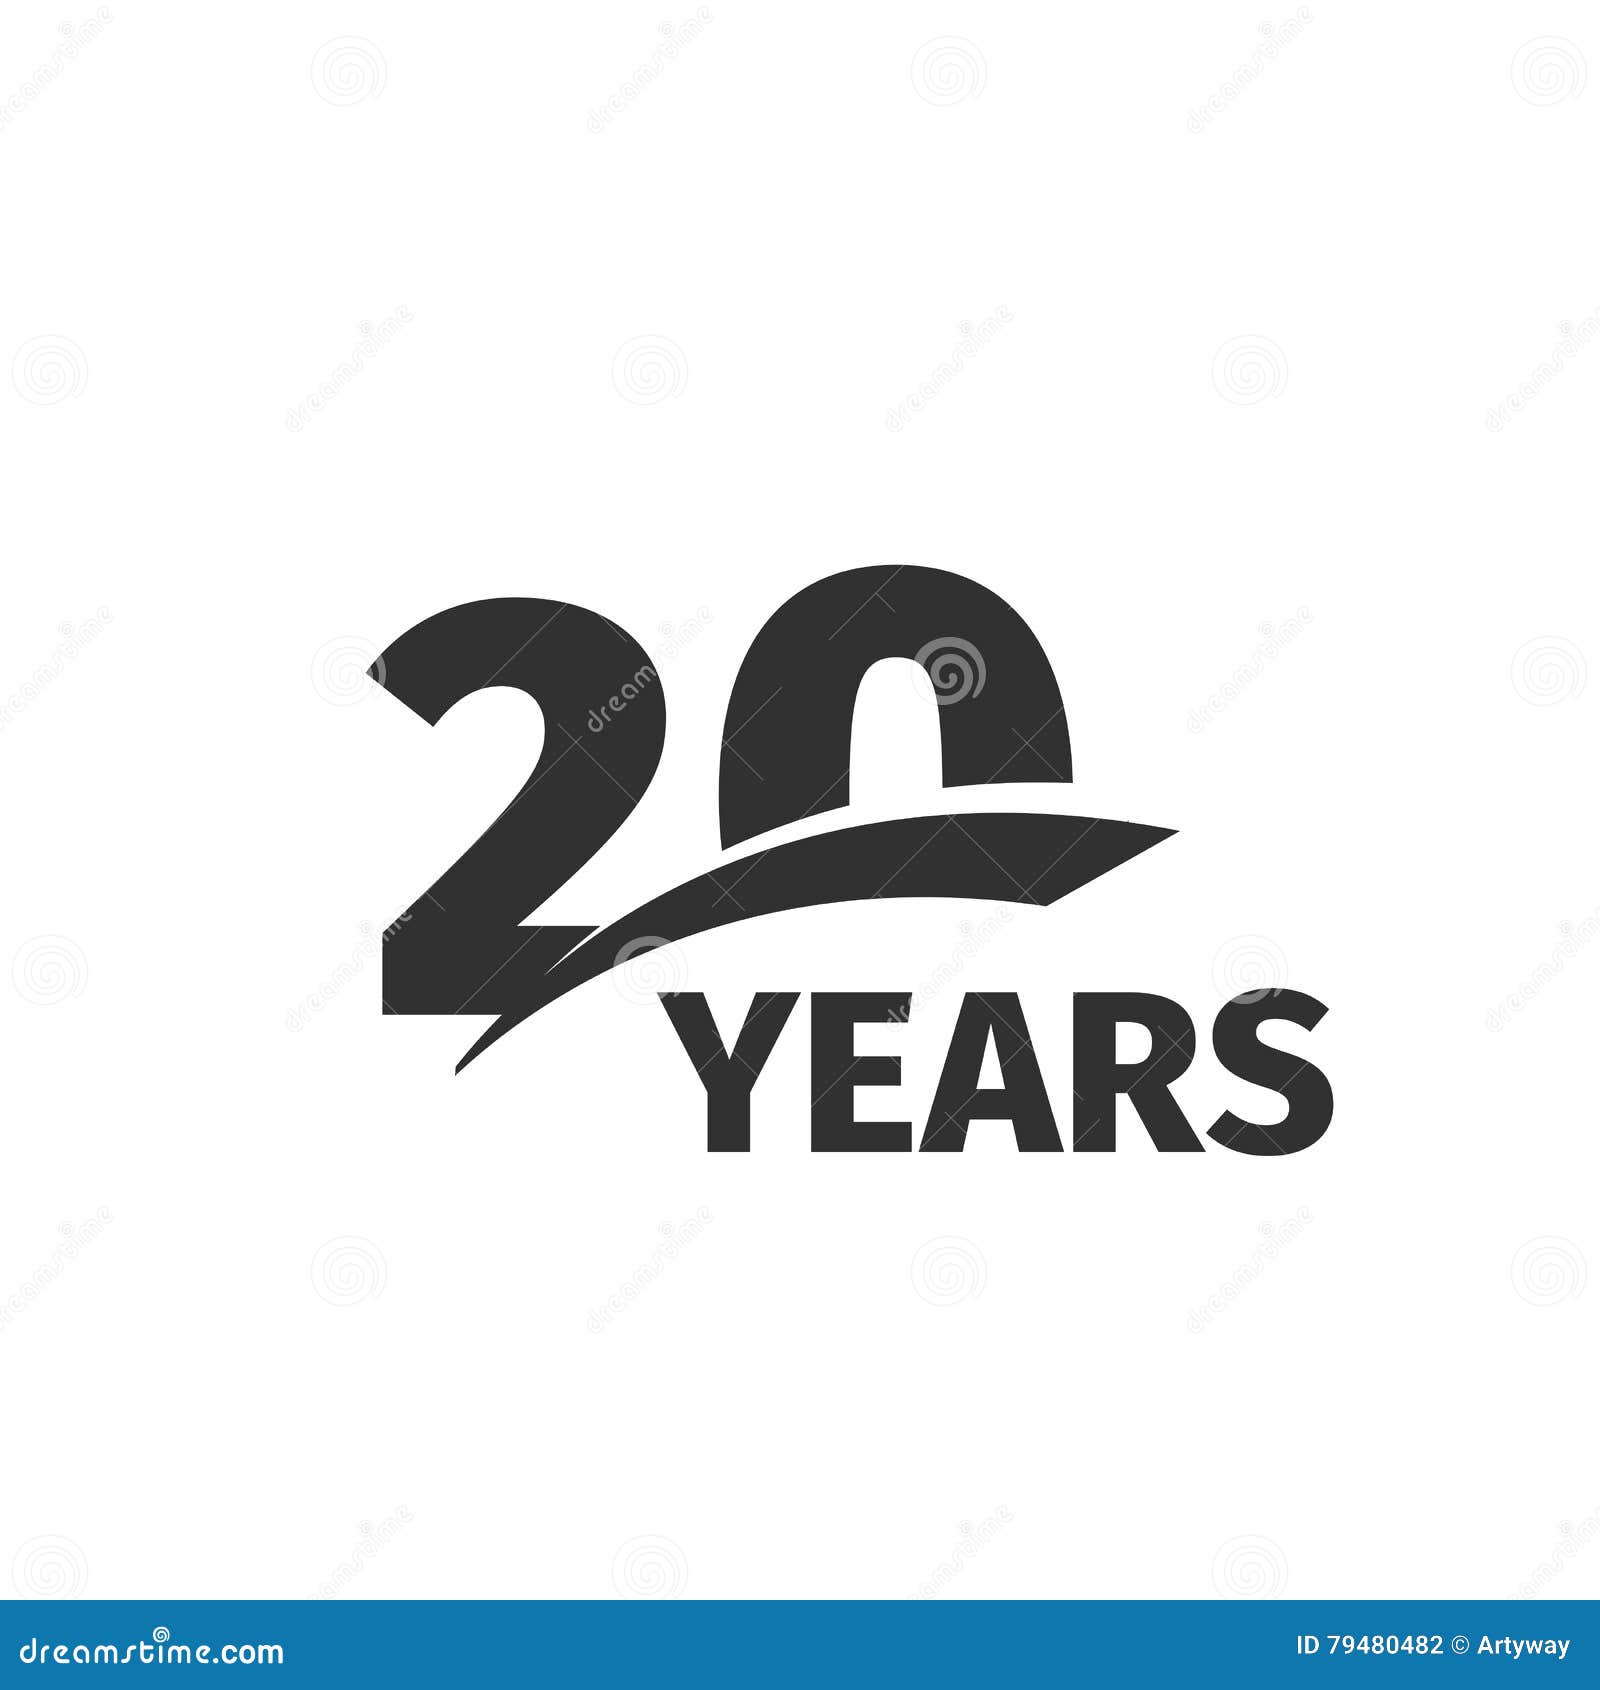 Share 103+ 20 years logo